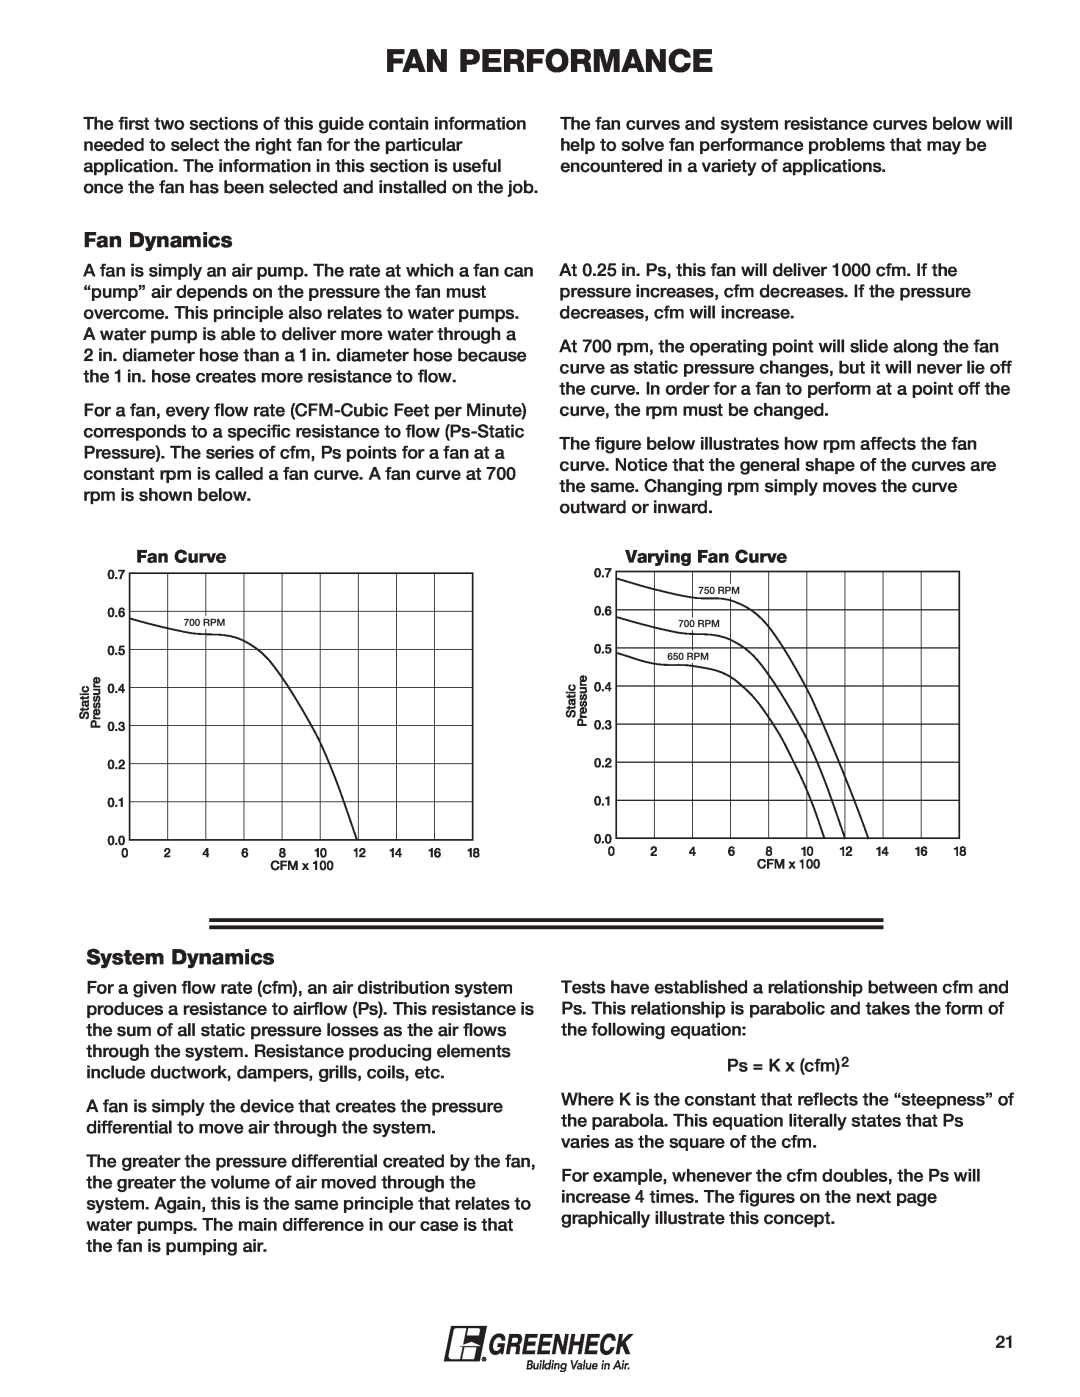 Greenheck Fan 240XP-CUb manual Fan Performance, Fan Dynamics, System Dynamics, Varying Fan Curve 